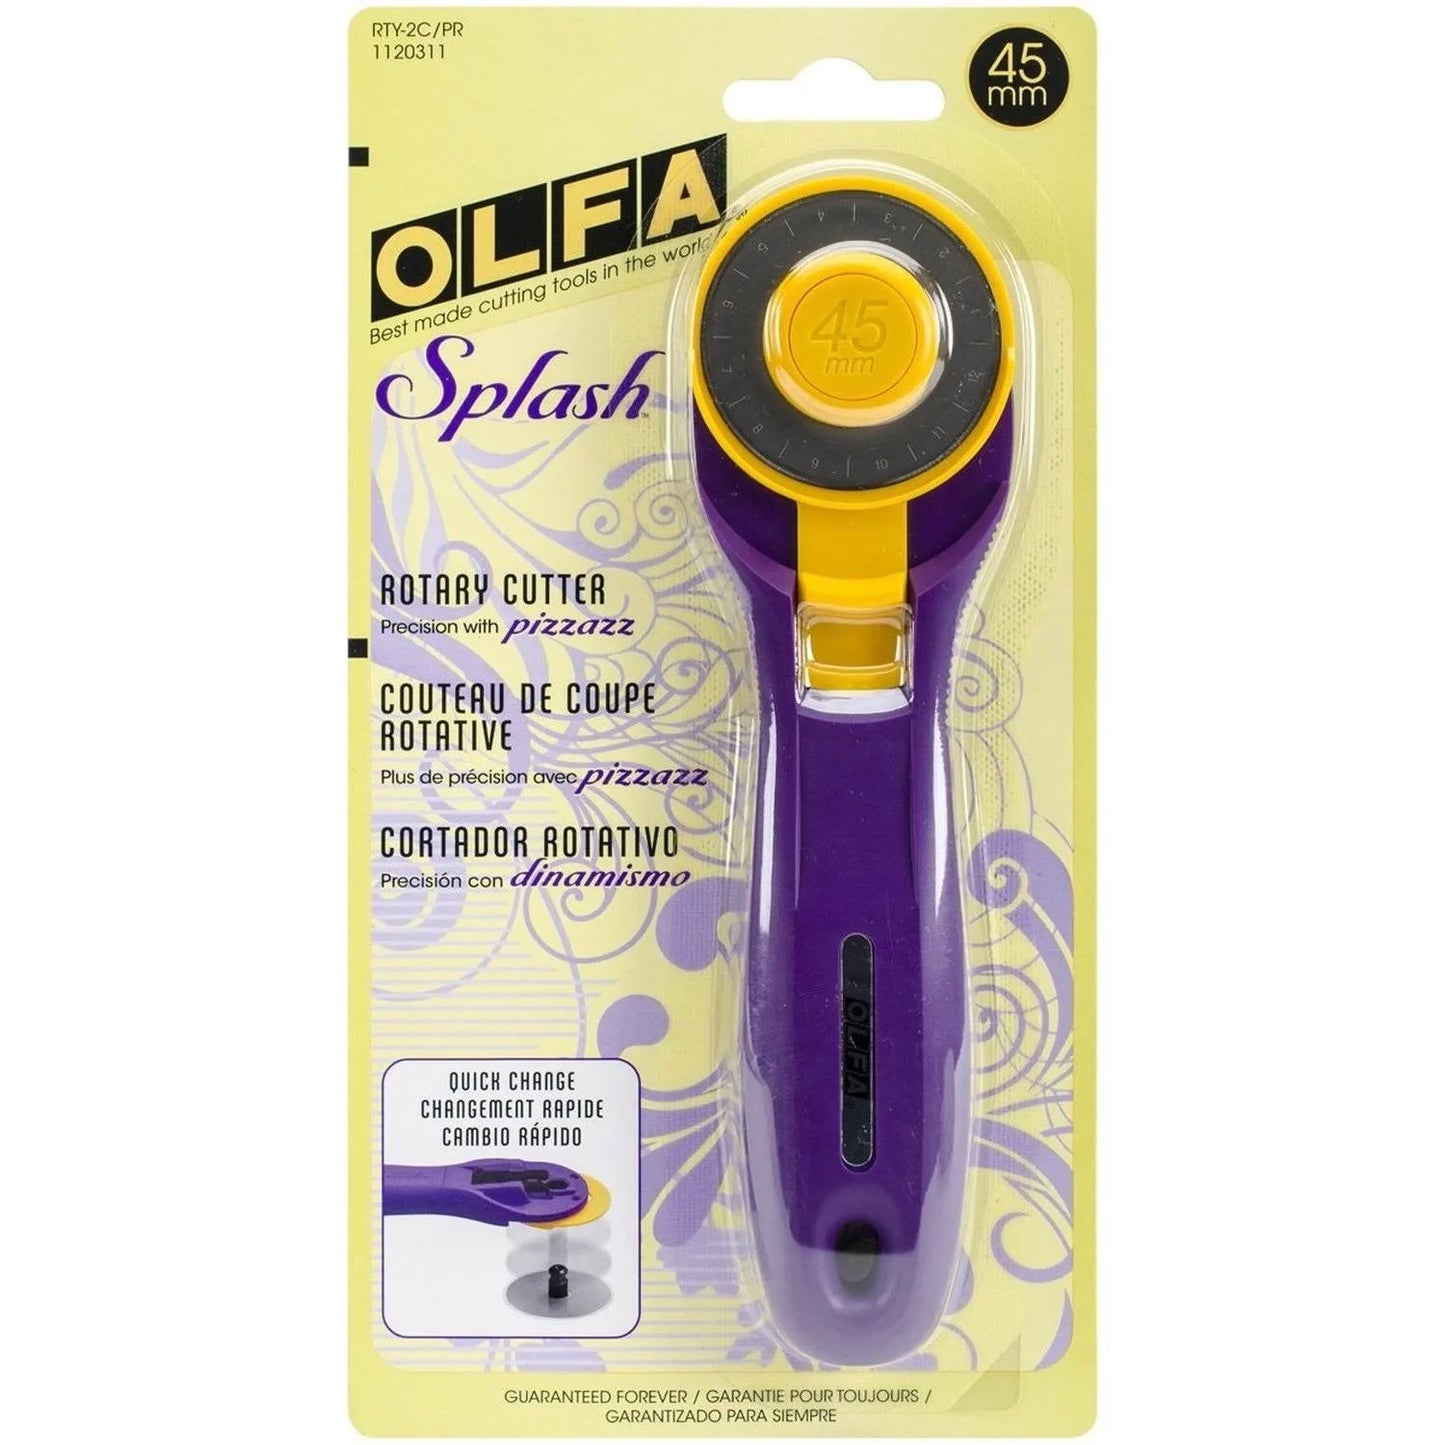 Olga 45mm Rotary cutter Splash in purple - sewing notions RBD swag